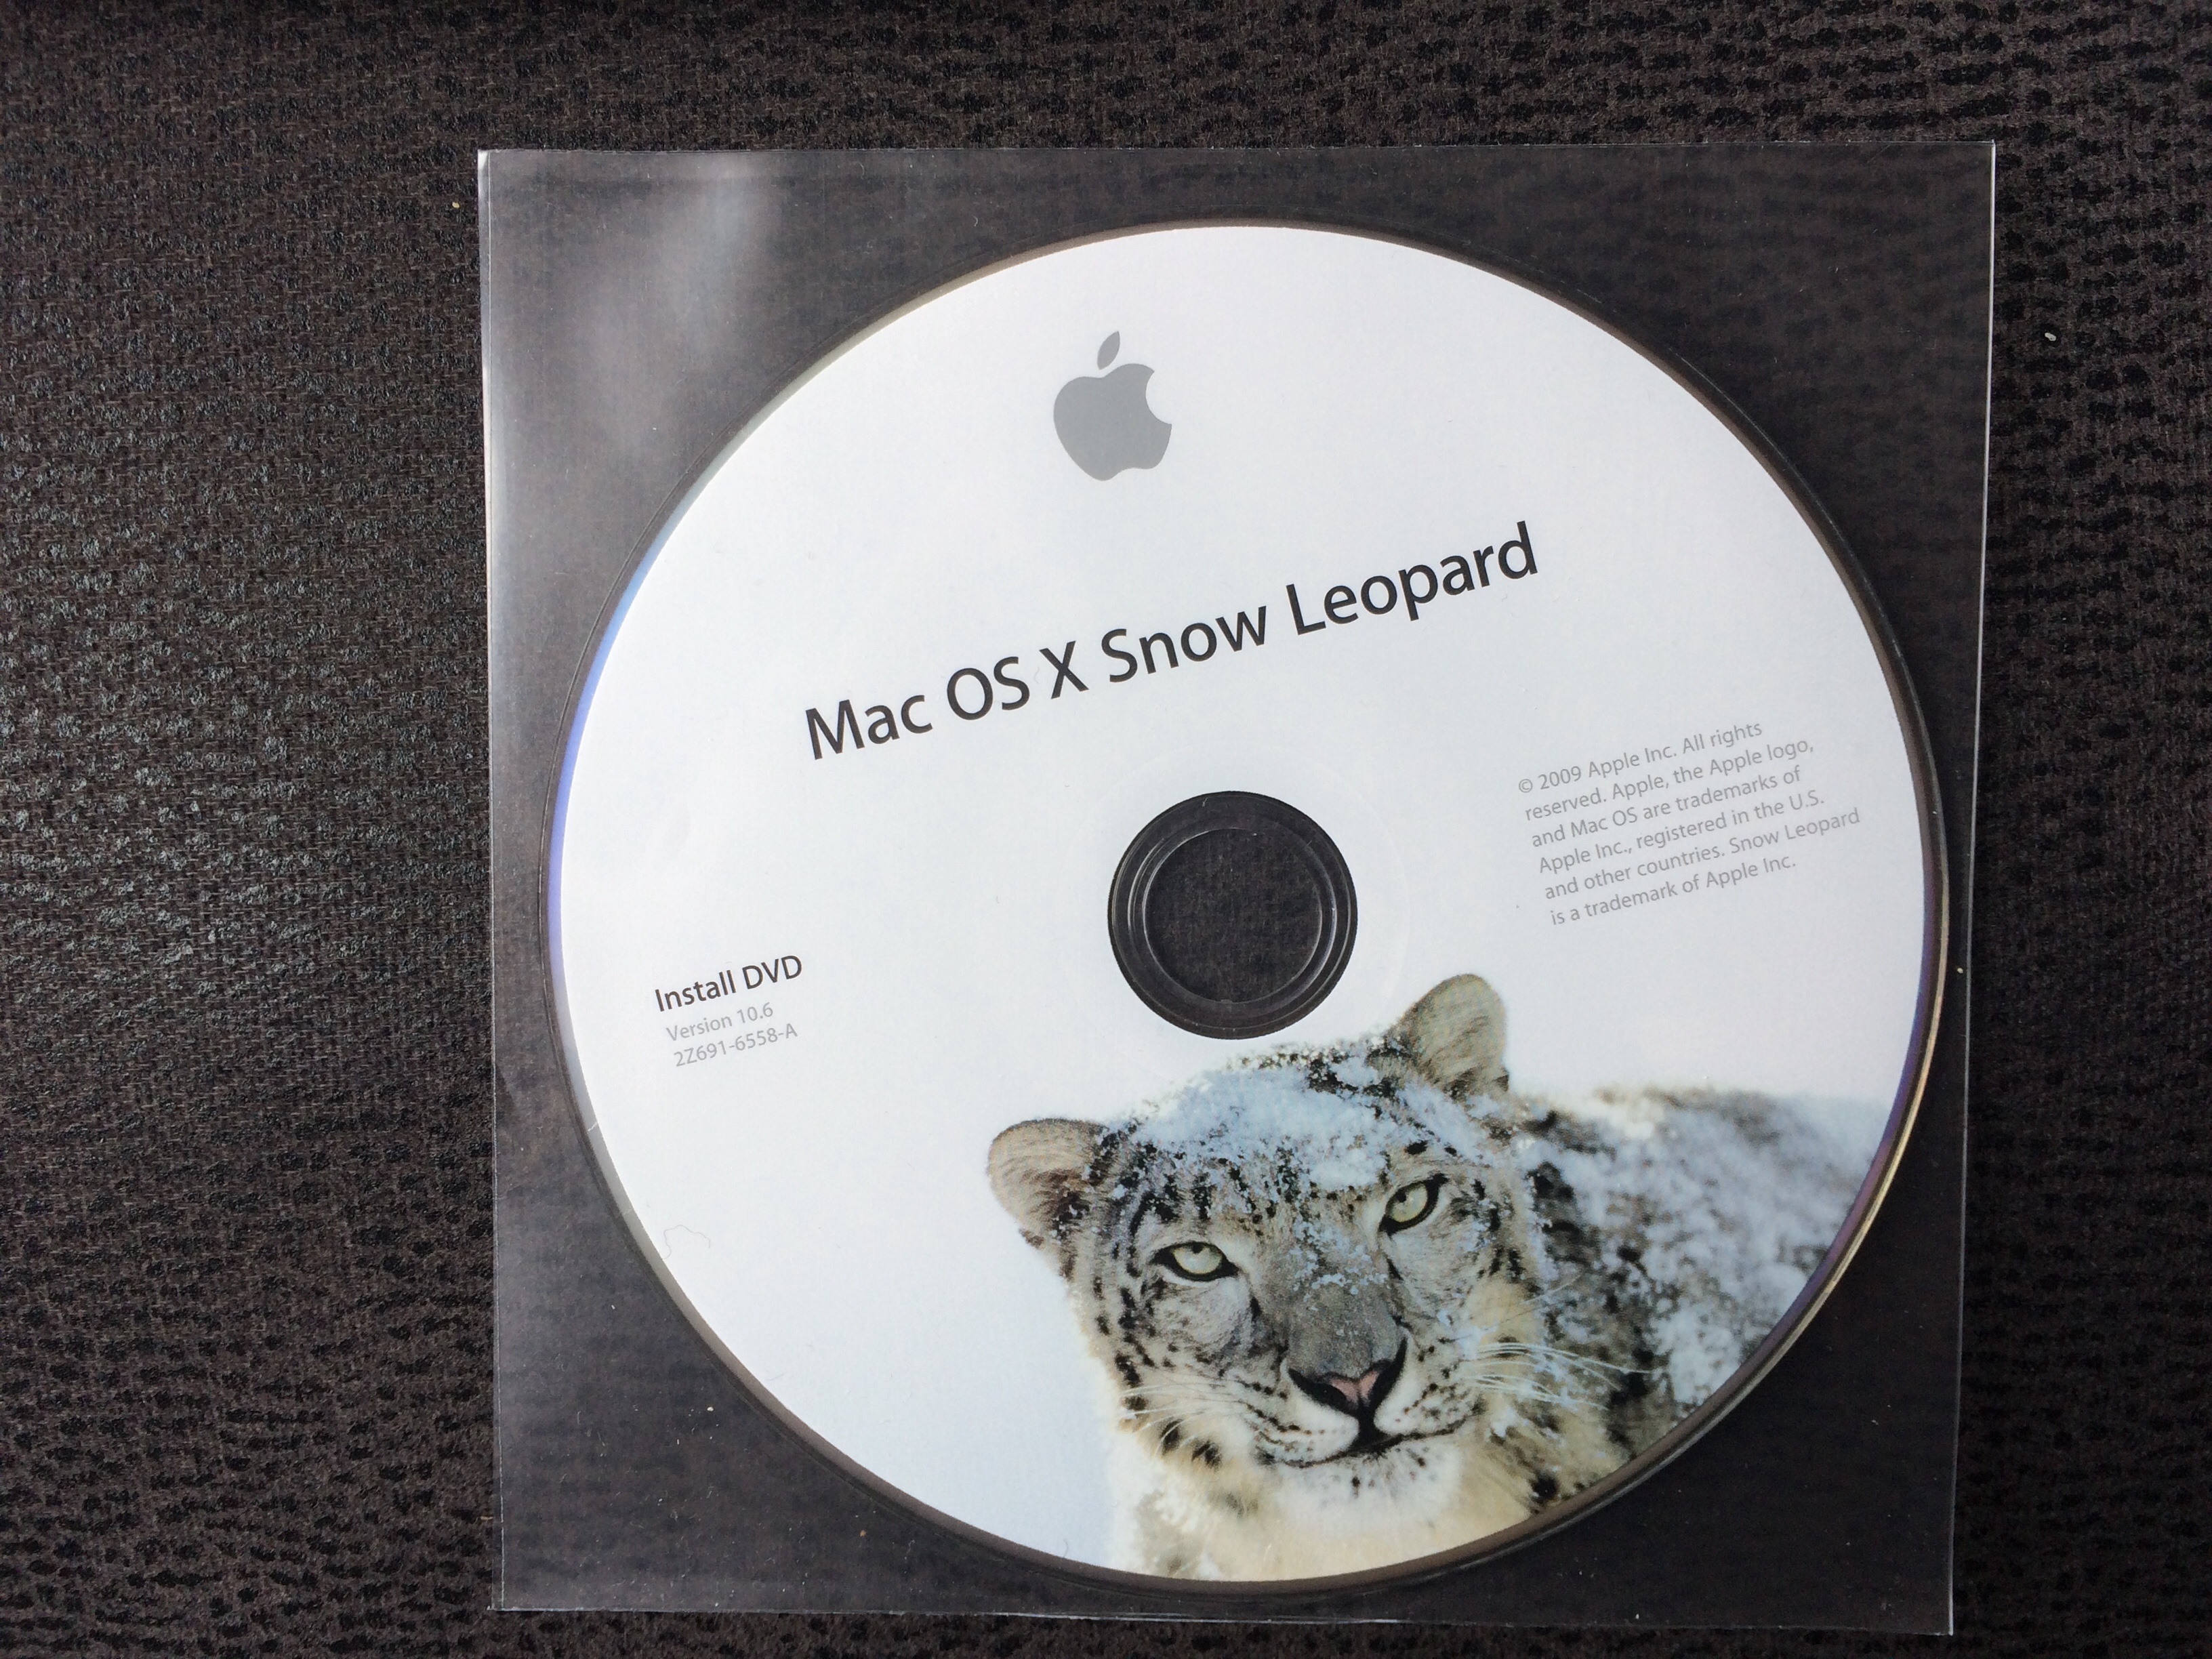 windows media player for mac os x snow leopard